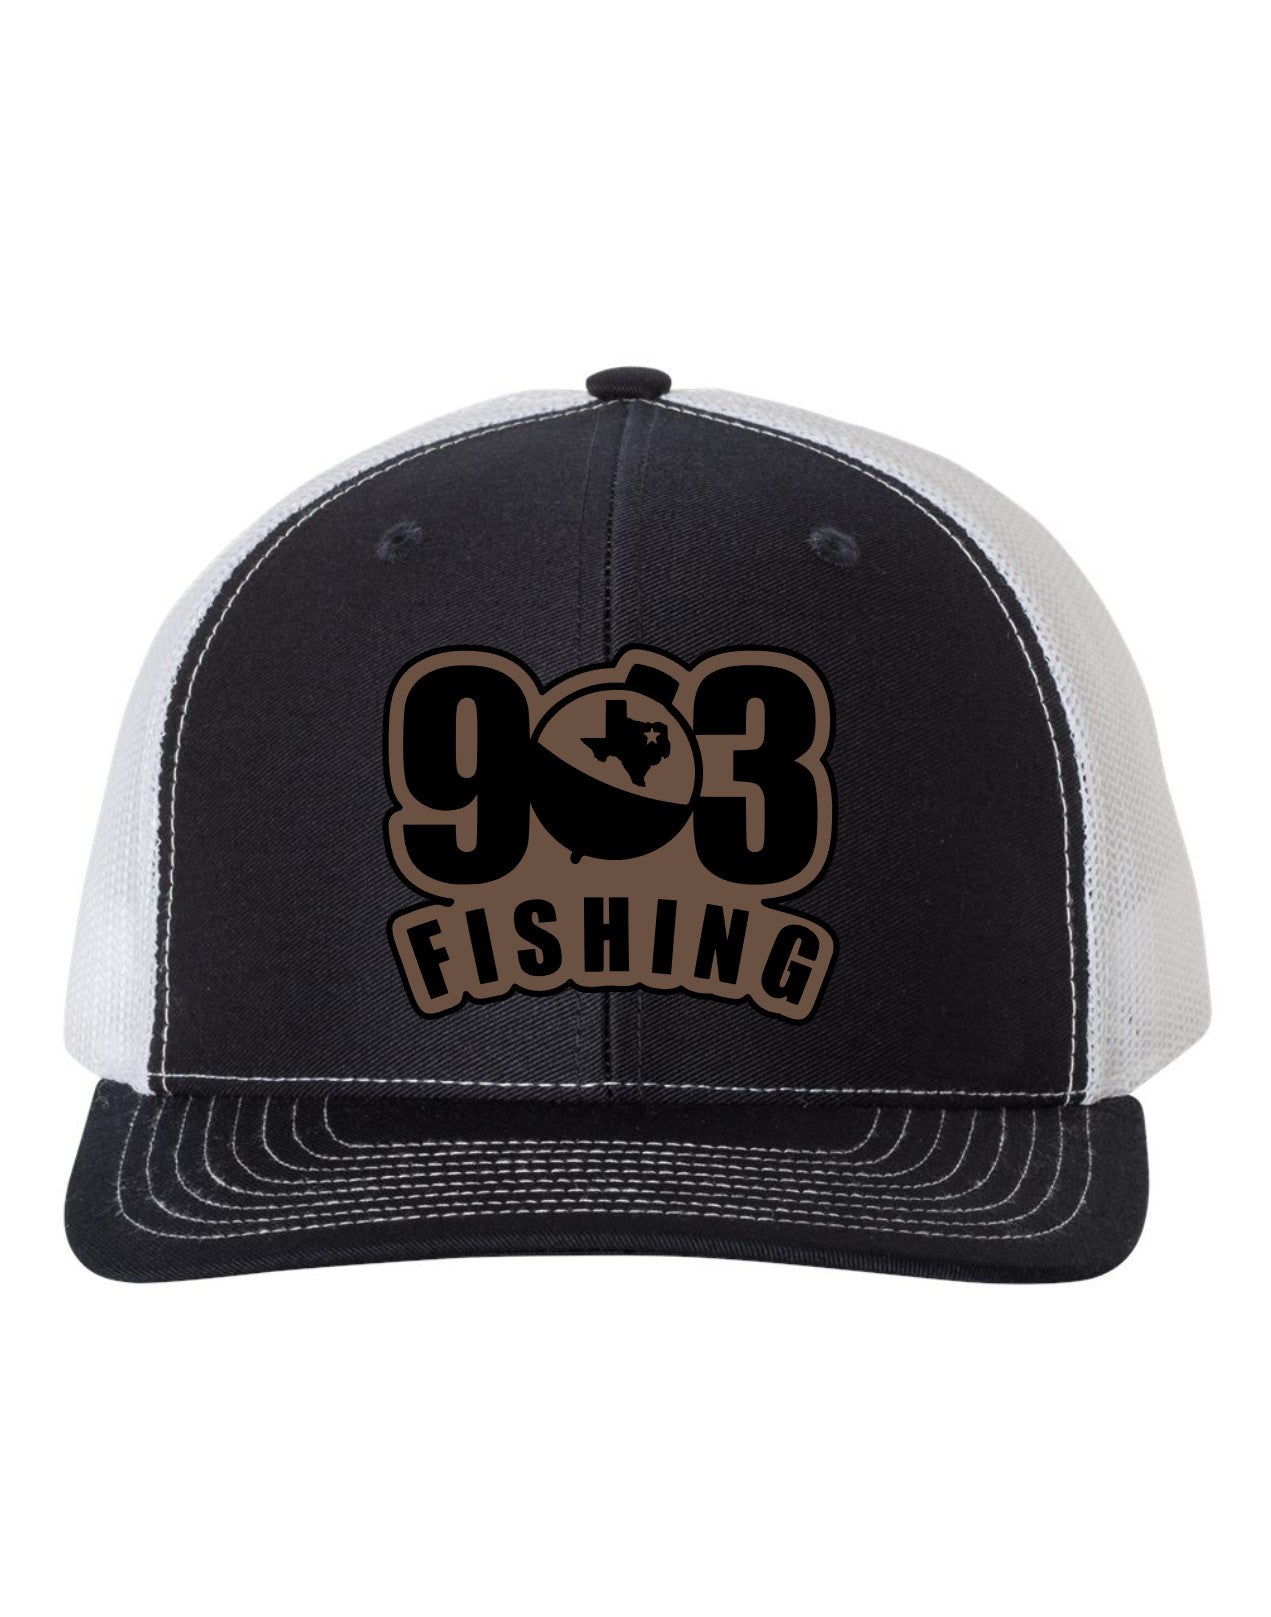 903 Fishing Leather Patch Richardson 112 Trucker Cap